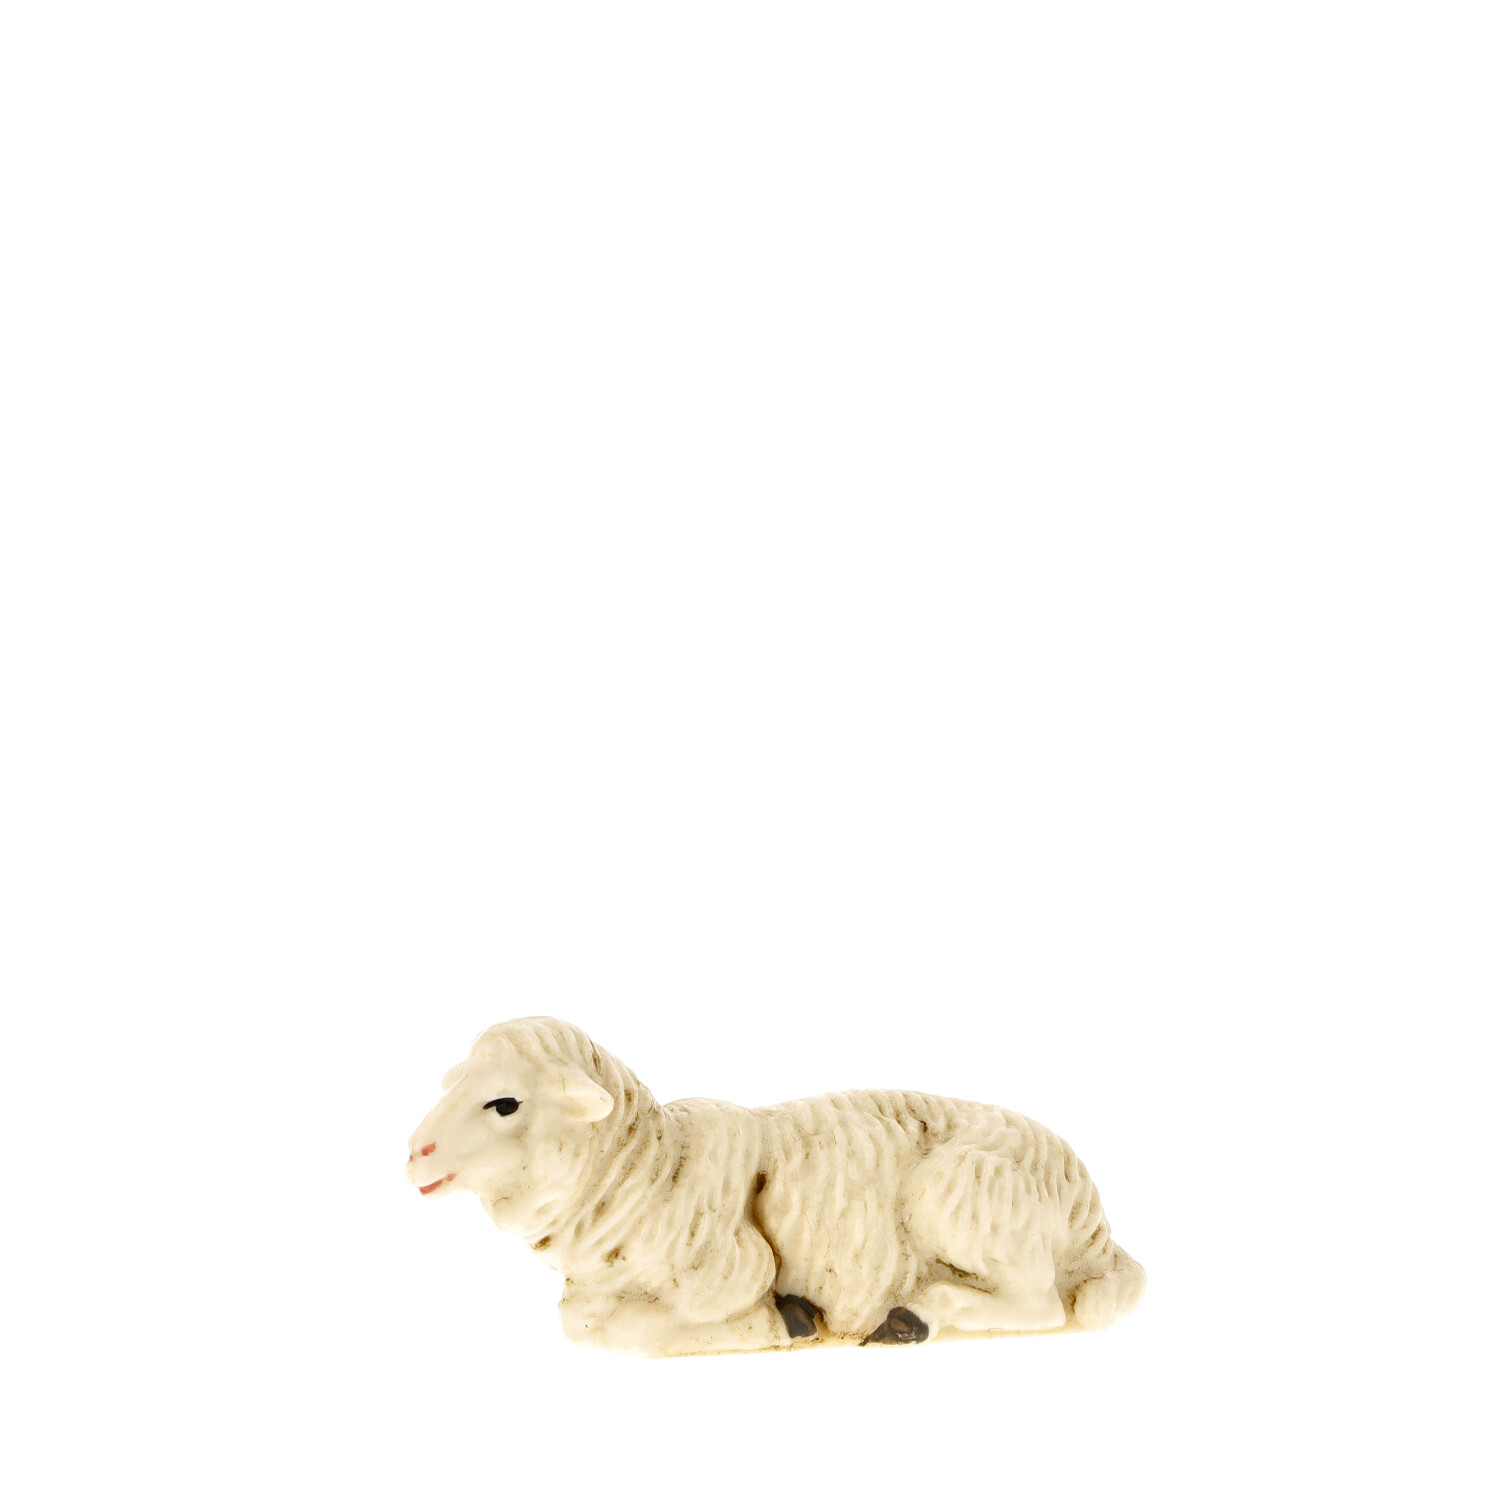 Schaf liegend - Marolin Plastik - Krippenfigur aus Kunststoff - made in Germany